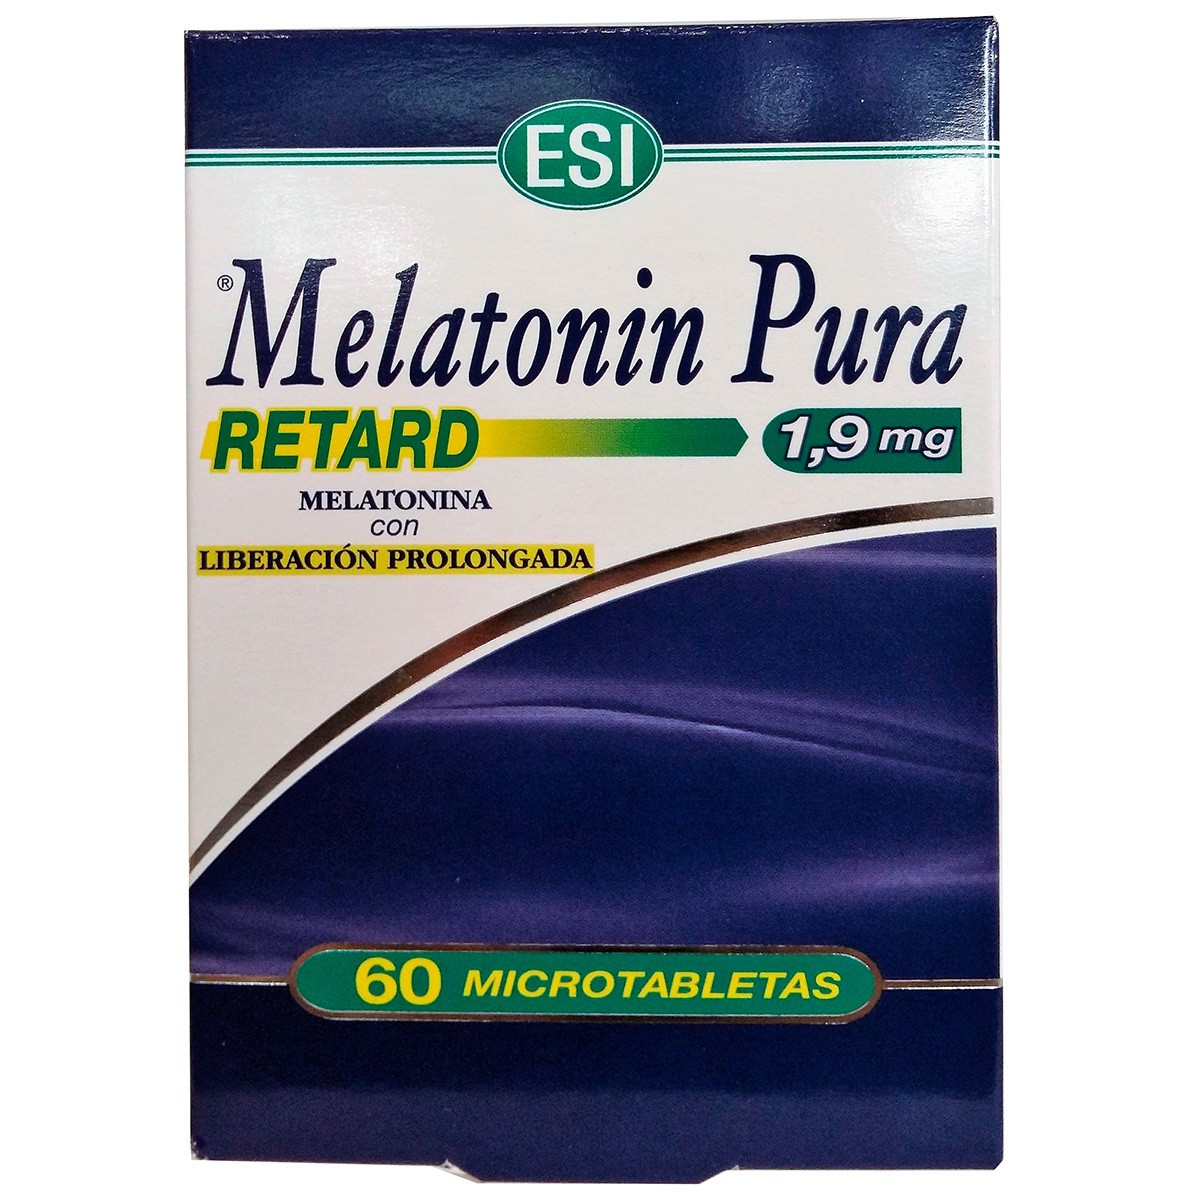 Melatonin retard pura 1,9 mg 60 tabs trepa